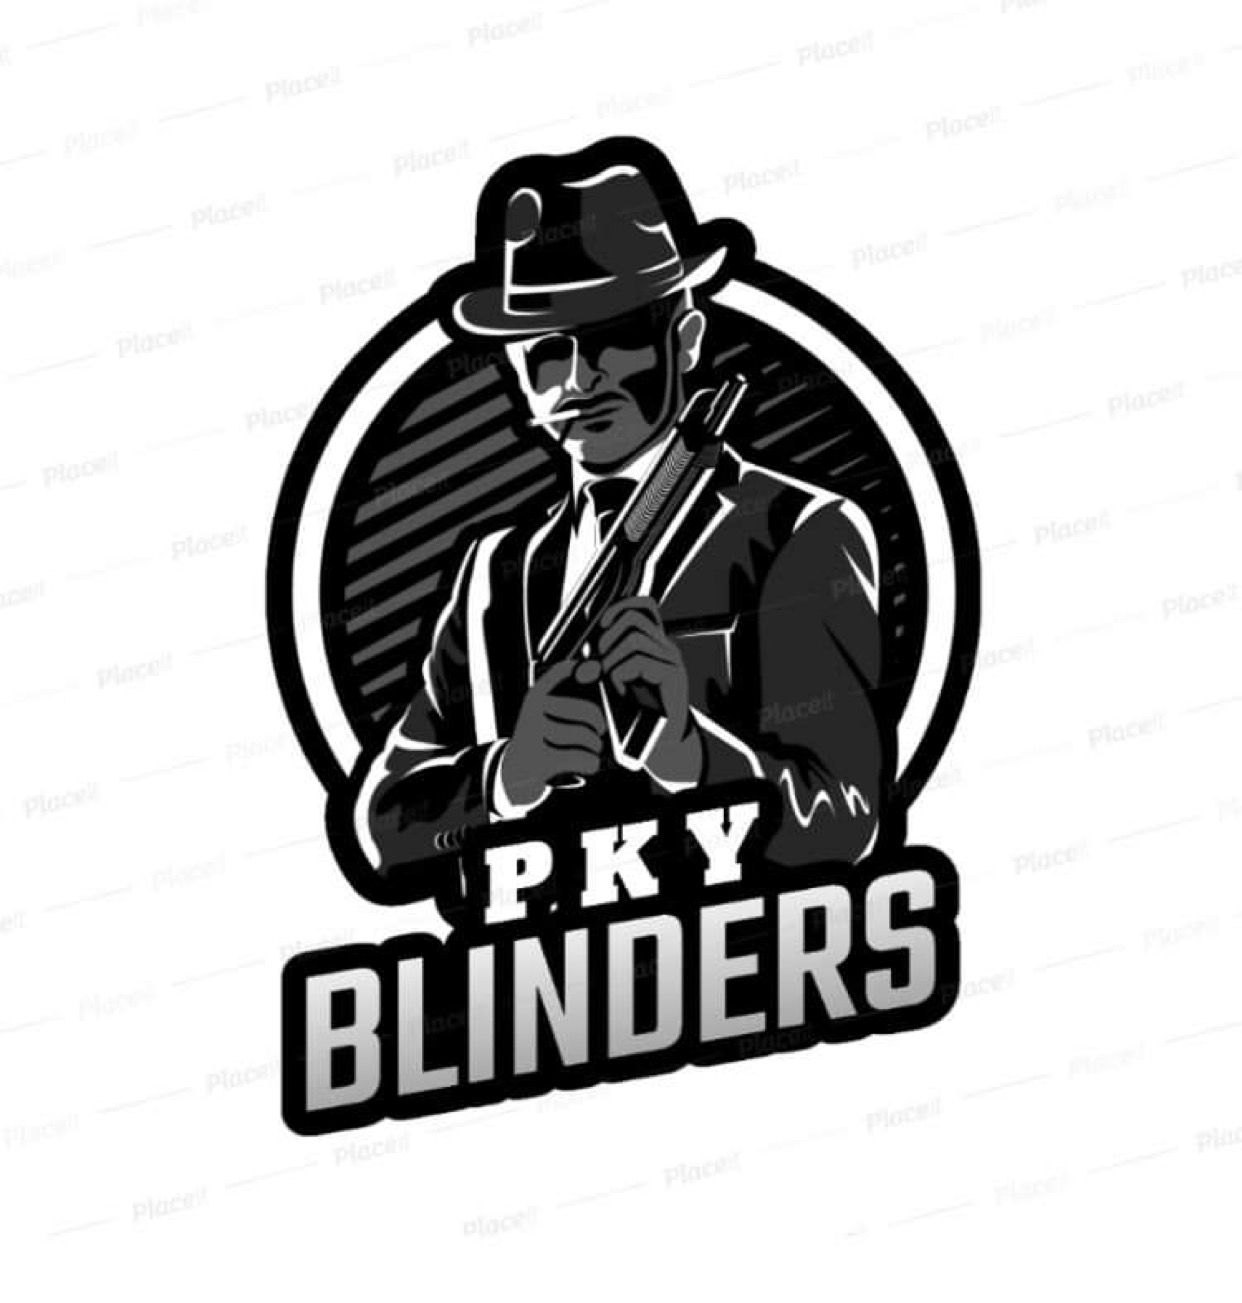 PKY BLINDERS